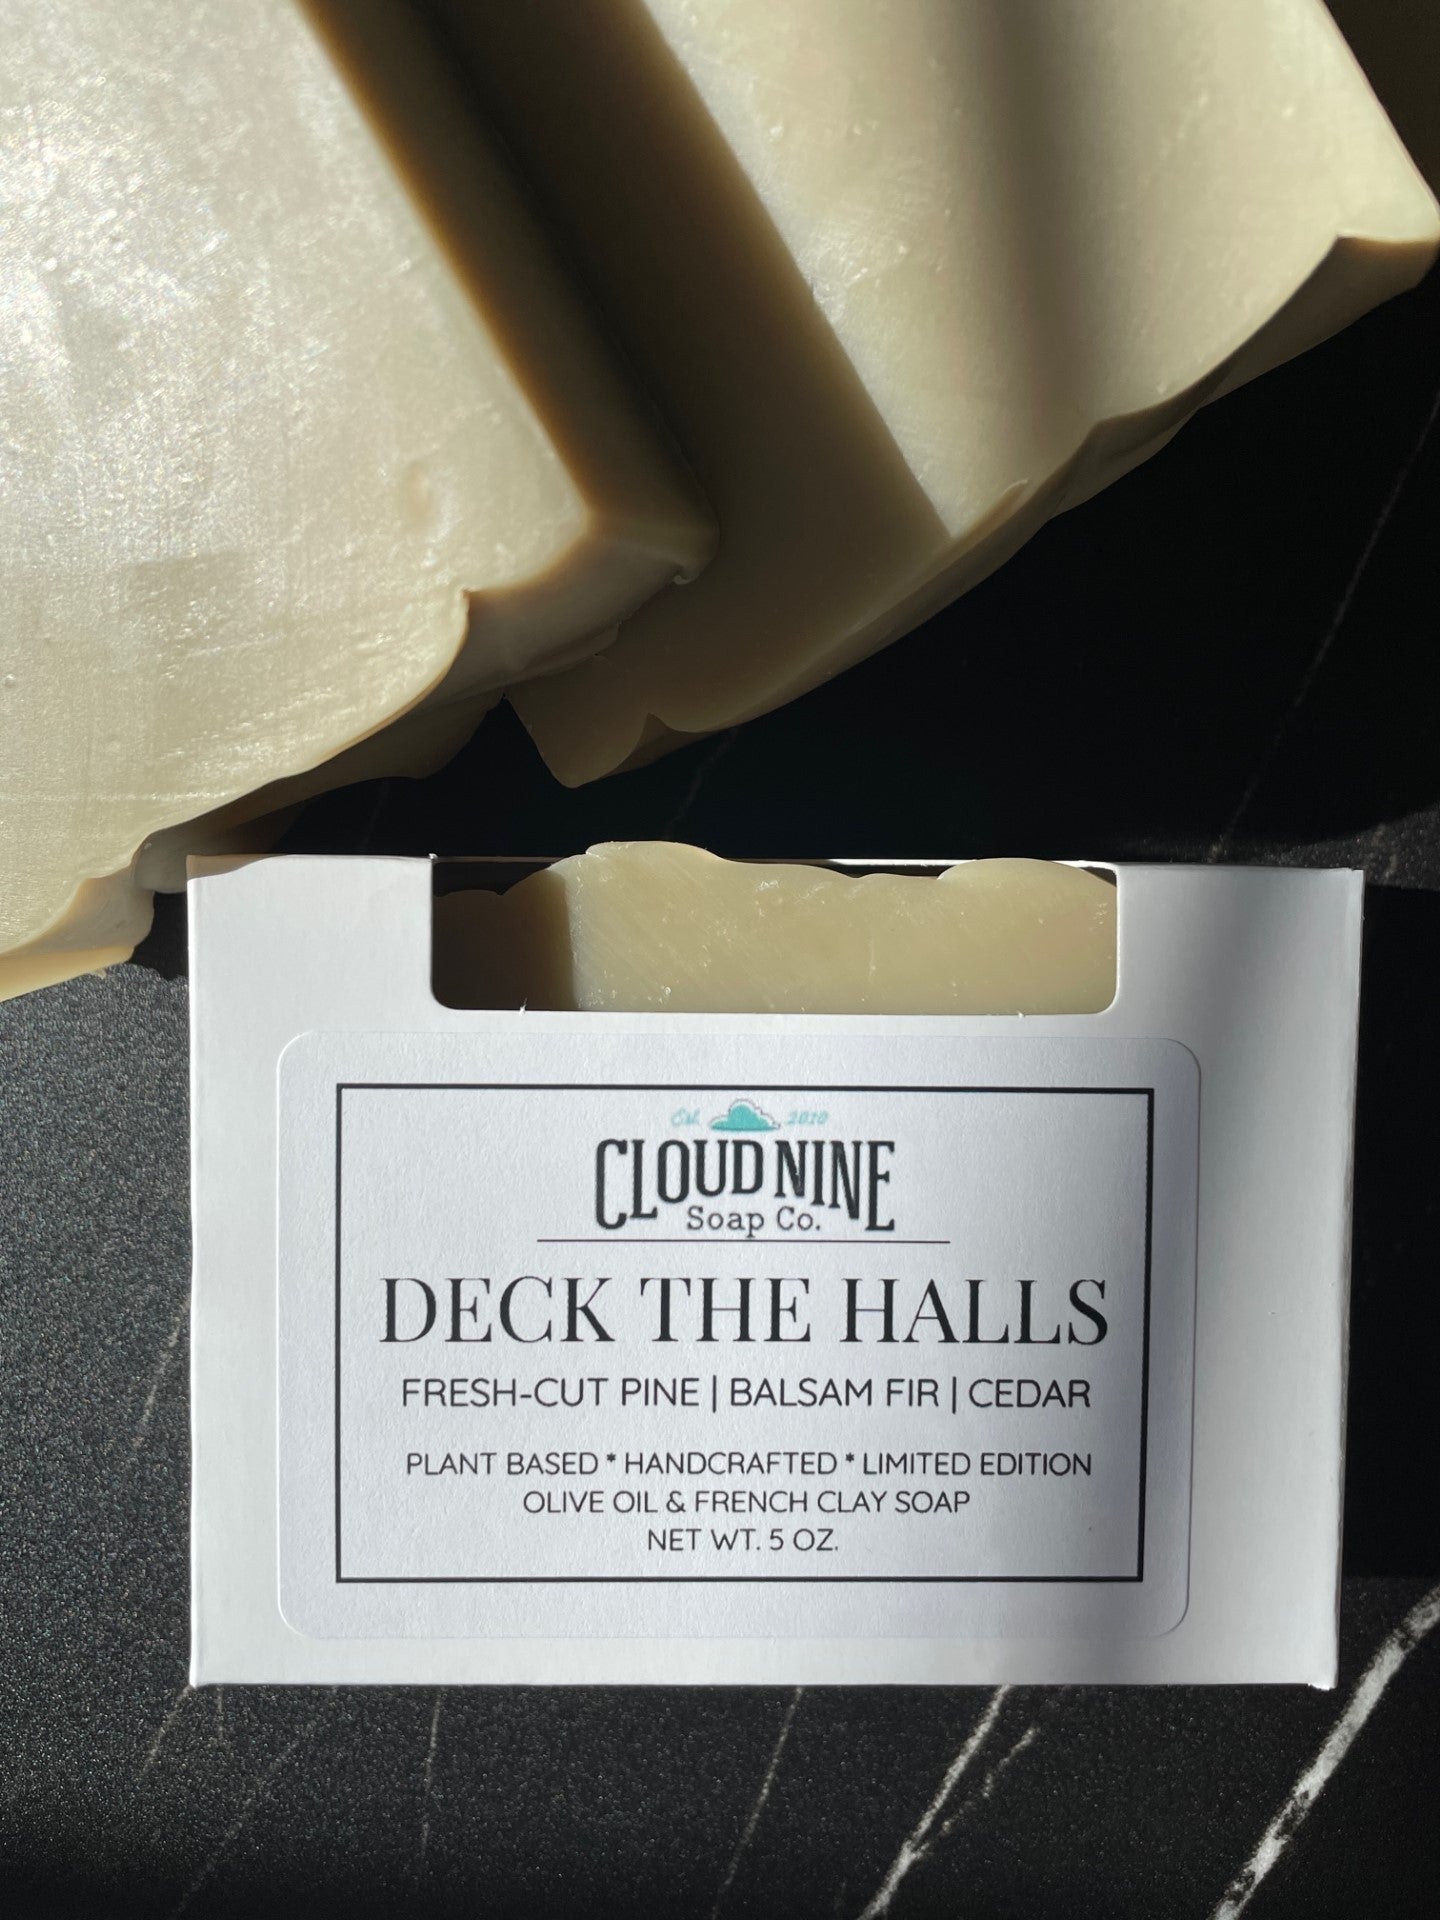 NEW! Limited Edition Holiday Soap, Deck The Halls: Fresh-Cut Pine, Balsam Fir, Cedar